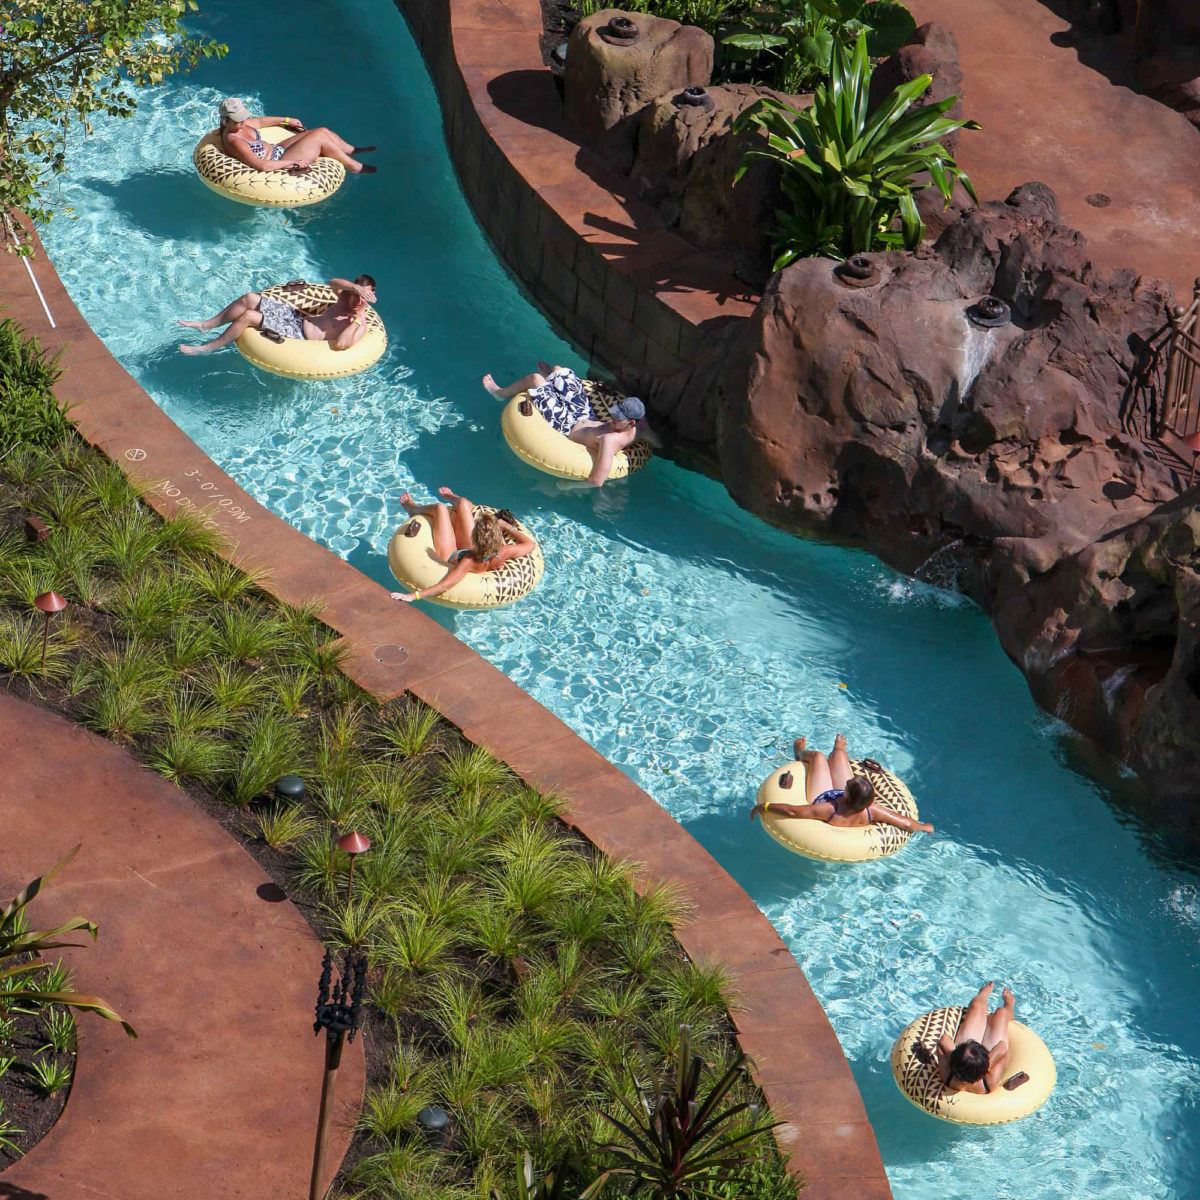 Lazy River at Disney Aulani Resort in Oahu, Hawaii